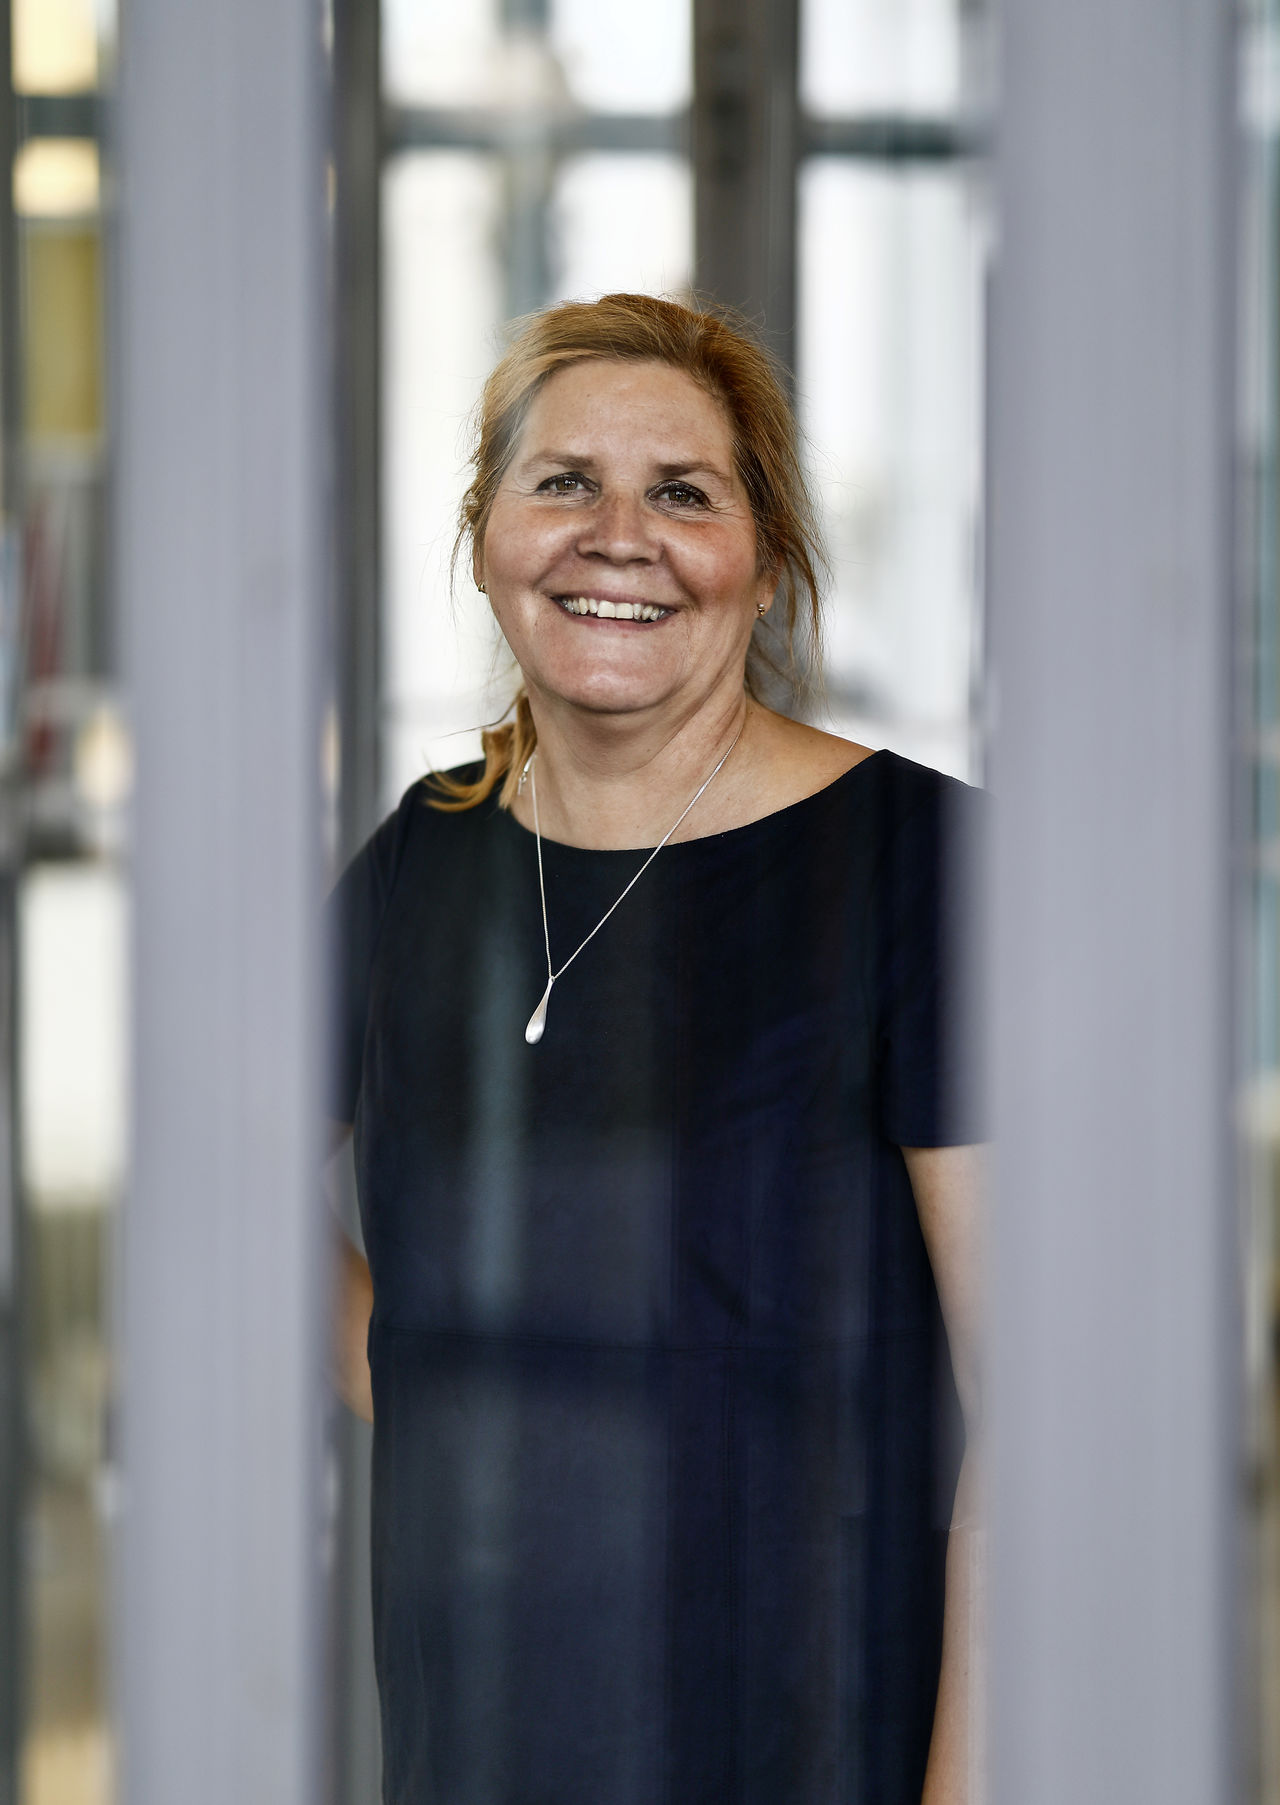 181023 Merja Willman (NorrkÃ¶pings Kommun) under Klimatsamverkanskonferensen 2018, den 23 oktober 2018 i NorrkÃ¶ping.  Foto: Peter Holgersson AB